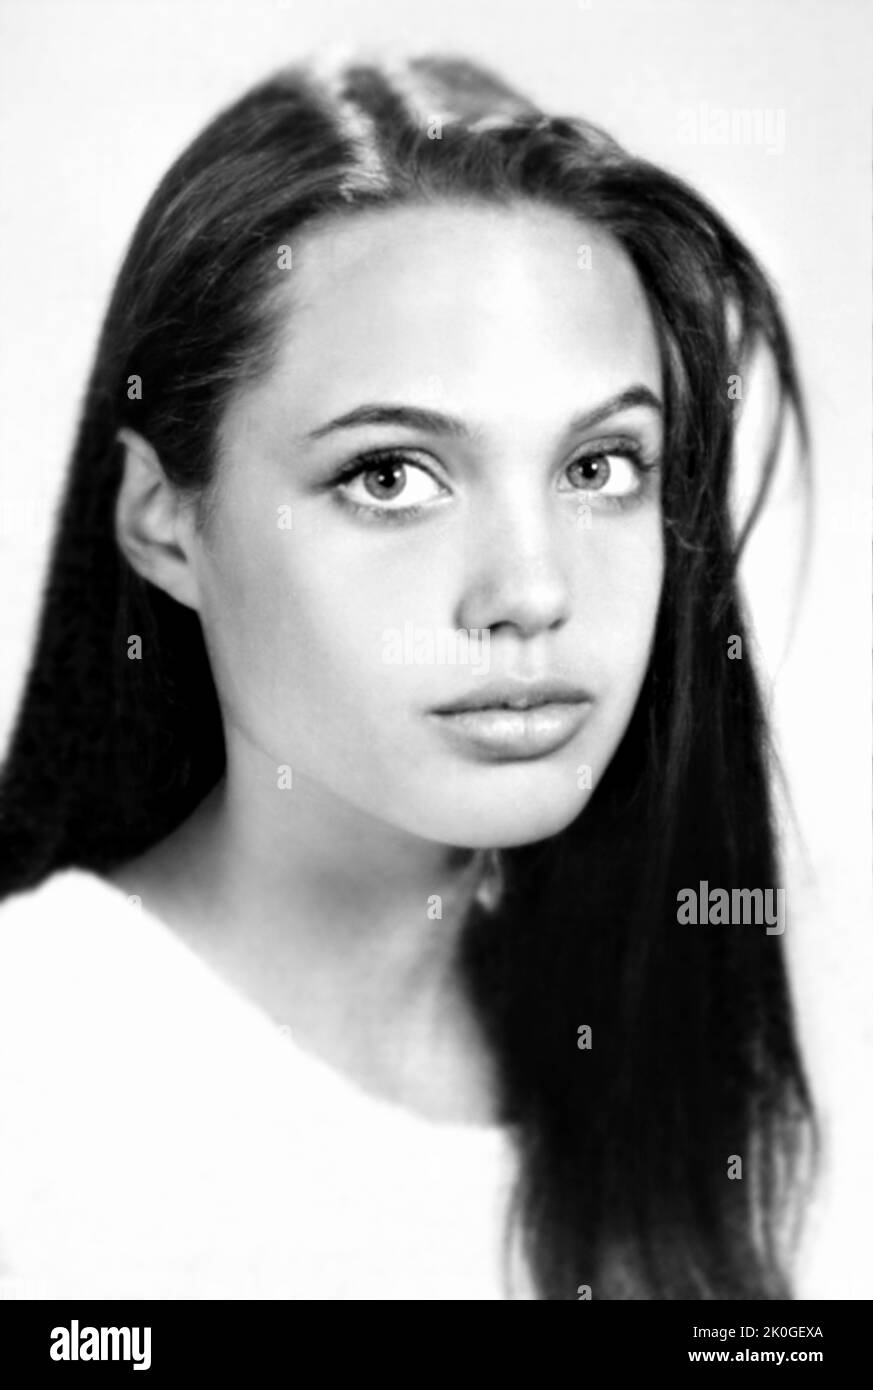 1992 , Los Angeles , USA : The celebrated american actress ANGELINA JOLIE Voight ( born 4 june 1975 ) when was young , aged 17, photo from HIGH SCHOOL YEARBOOK . Unknown photographer .- HISTORY - FOTO STORICHE - ATTRICE - MOVIE - CINEMA  - personalità da da giovane giovani - personality personalities when was young - ANNUARIO SCOLASTICO - SEX SYMBOL - TEENAGER - PORTRAIT- RITRATTO --- ARCHIVIO GBB Stock Photo